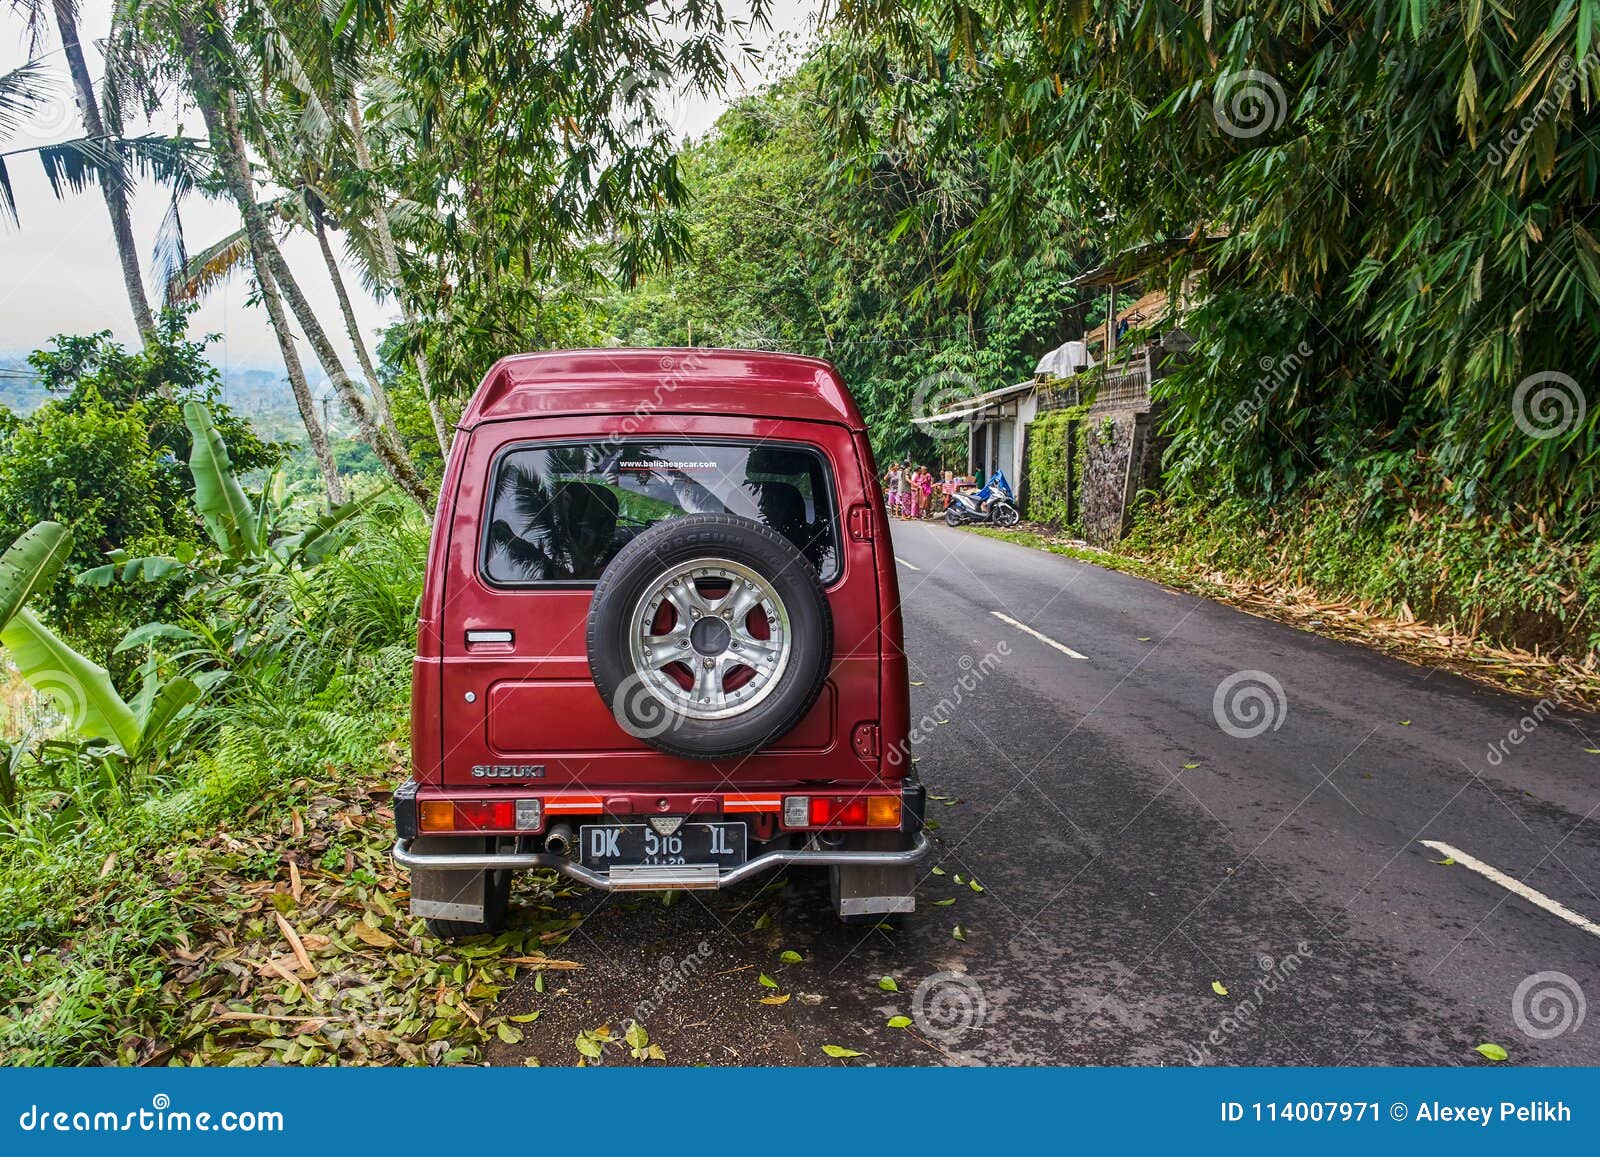 BALI ISLAND, INDONESIA - DECEMBER 17, 2017: Small Car on the Mountain